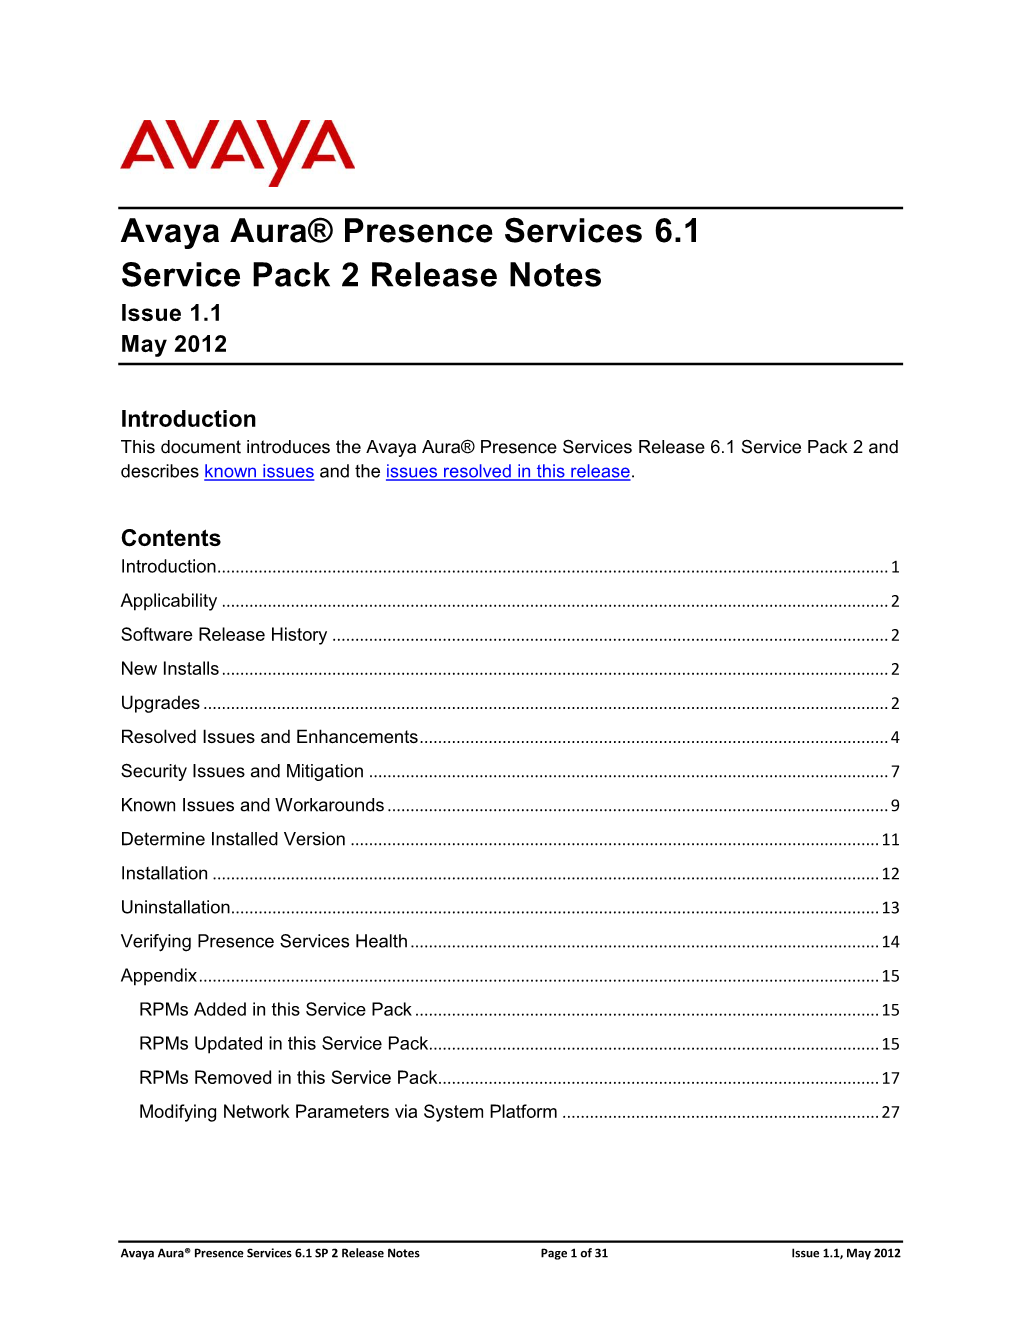 Avaya Aura® Presence Services 6.1 Service Pack 2 Release Notes